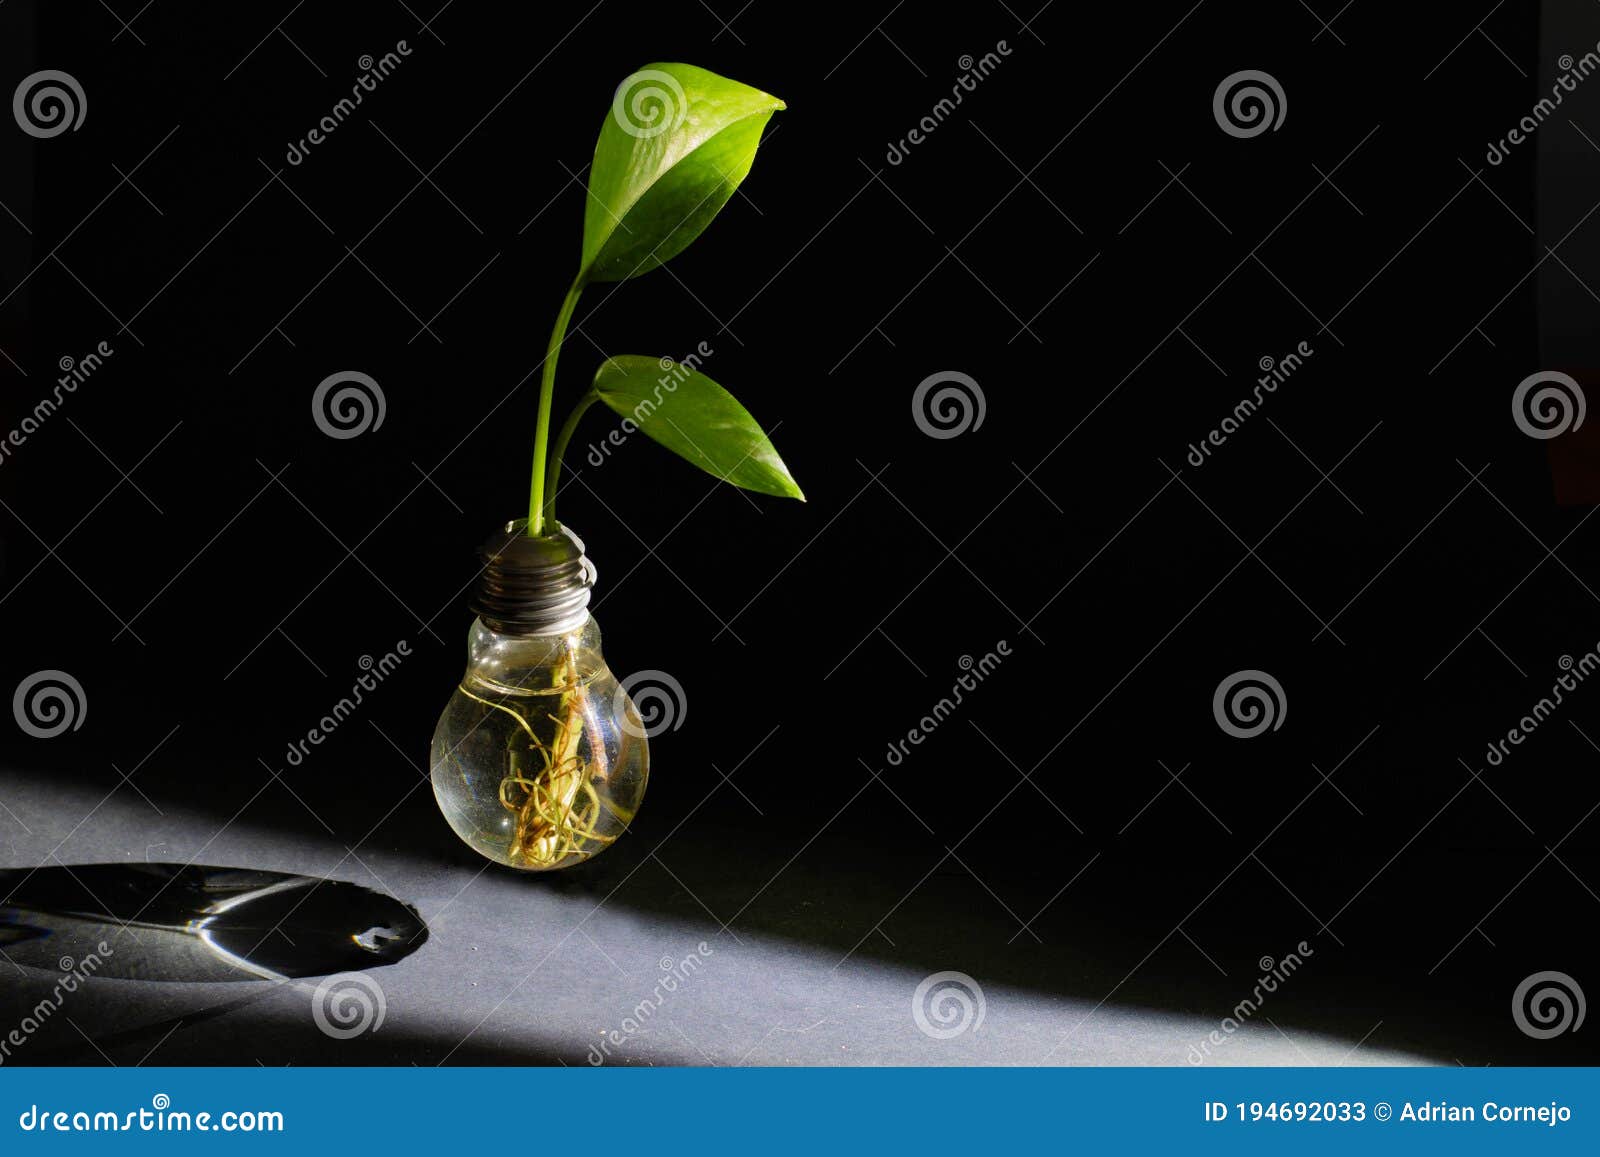 green plant living in a light bulb